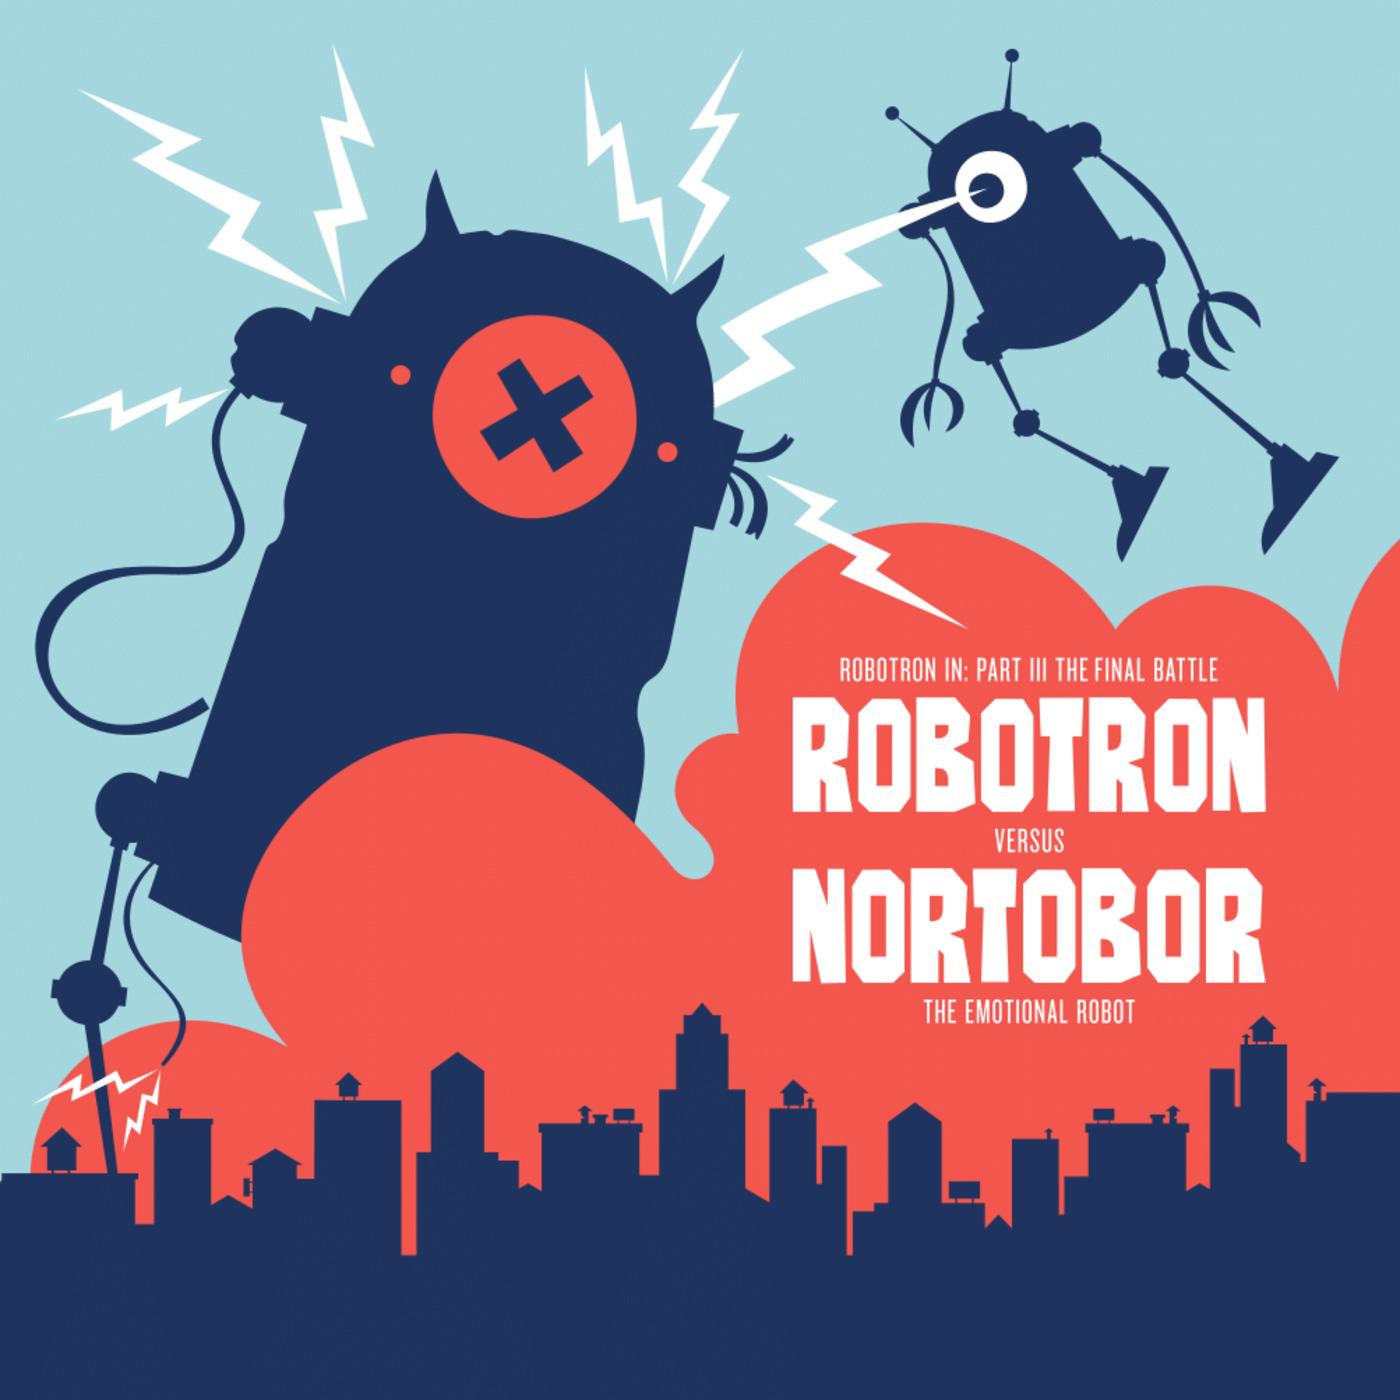 Robotron in: Part III the Final Battle Robotron Vs Nortobor, The Emotional Robot